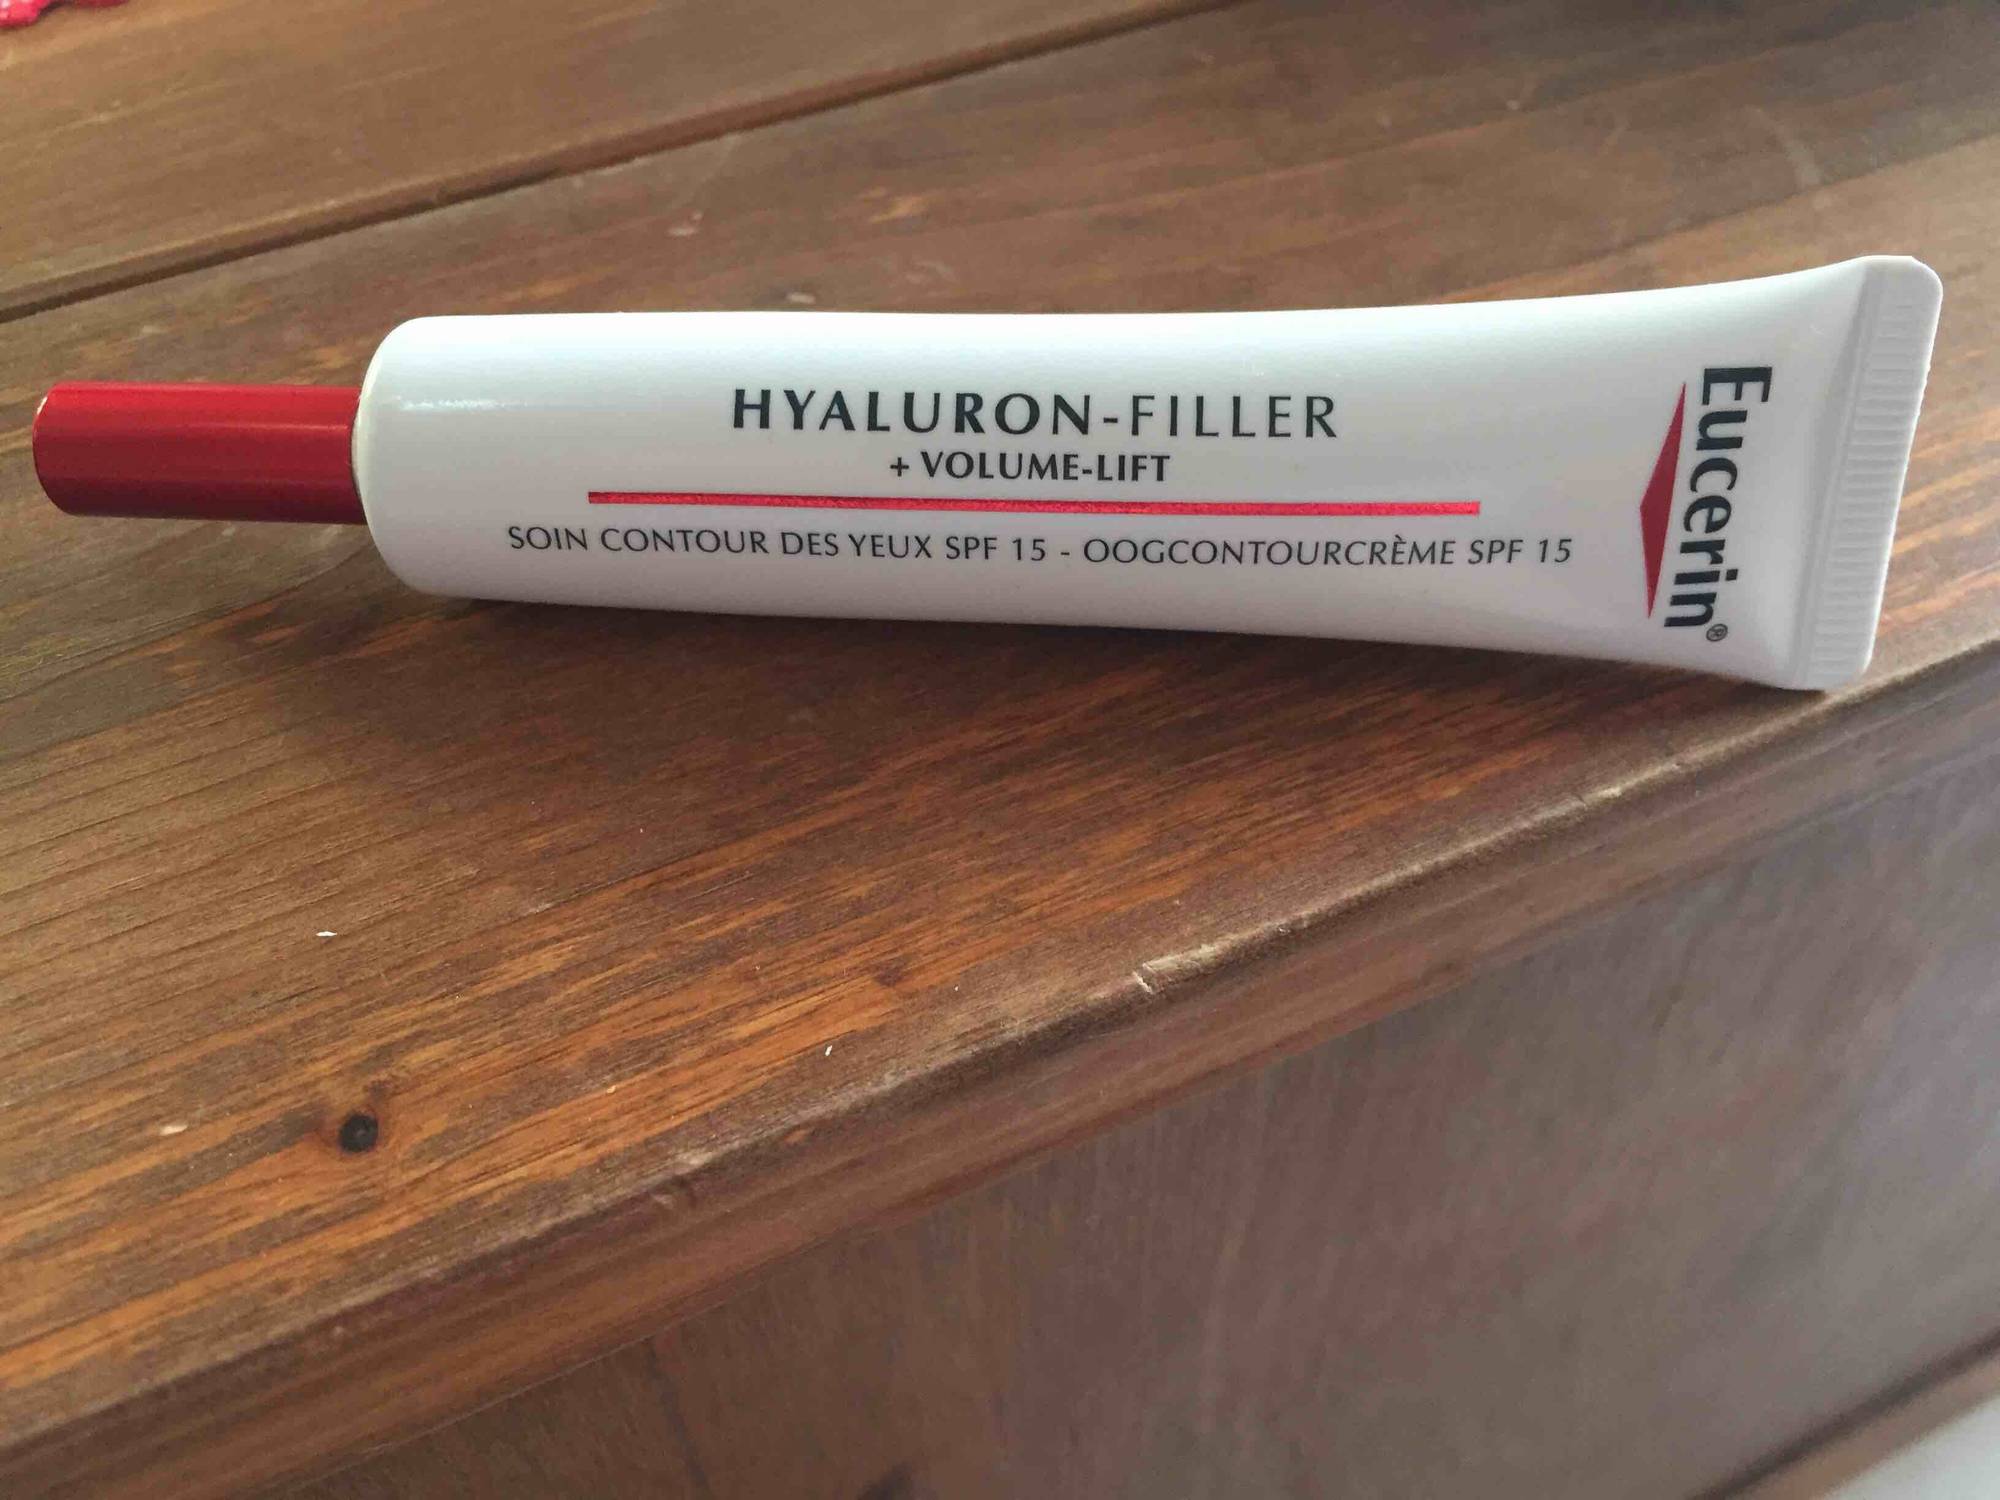 EUCERIN - Hyaluron-Filler - Soin contour des yeux SPF 15